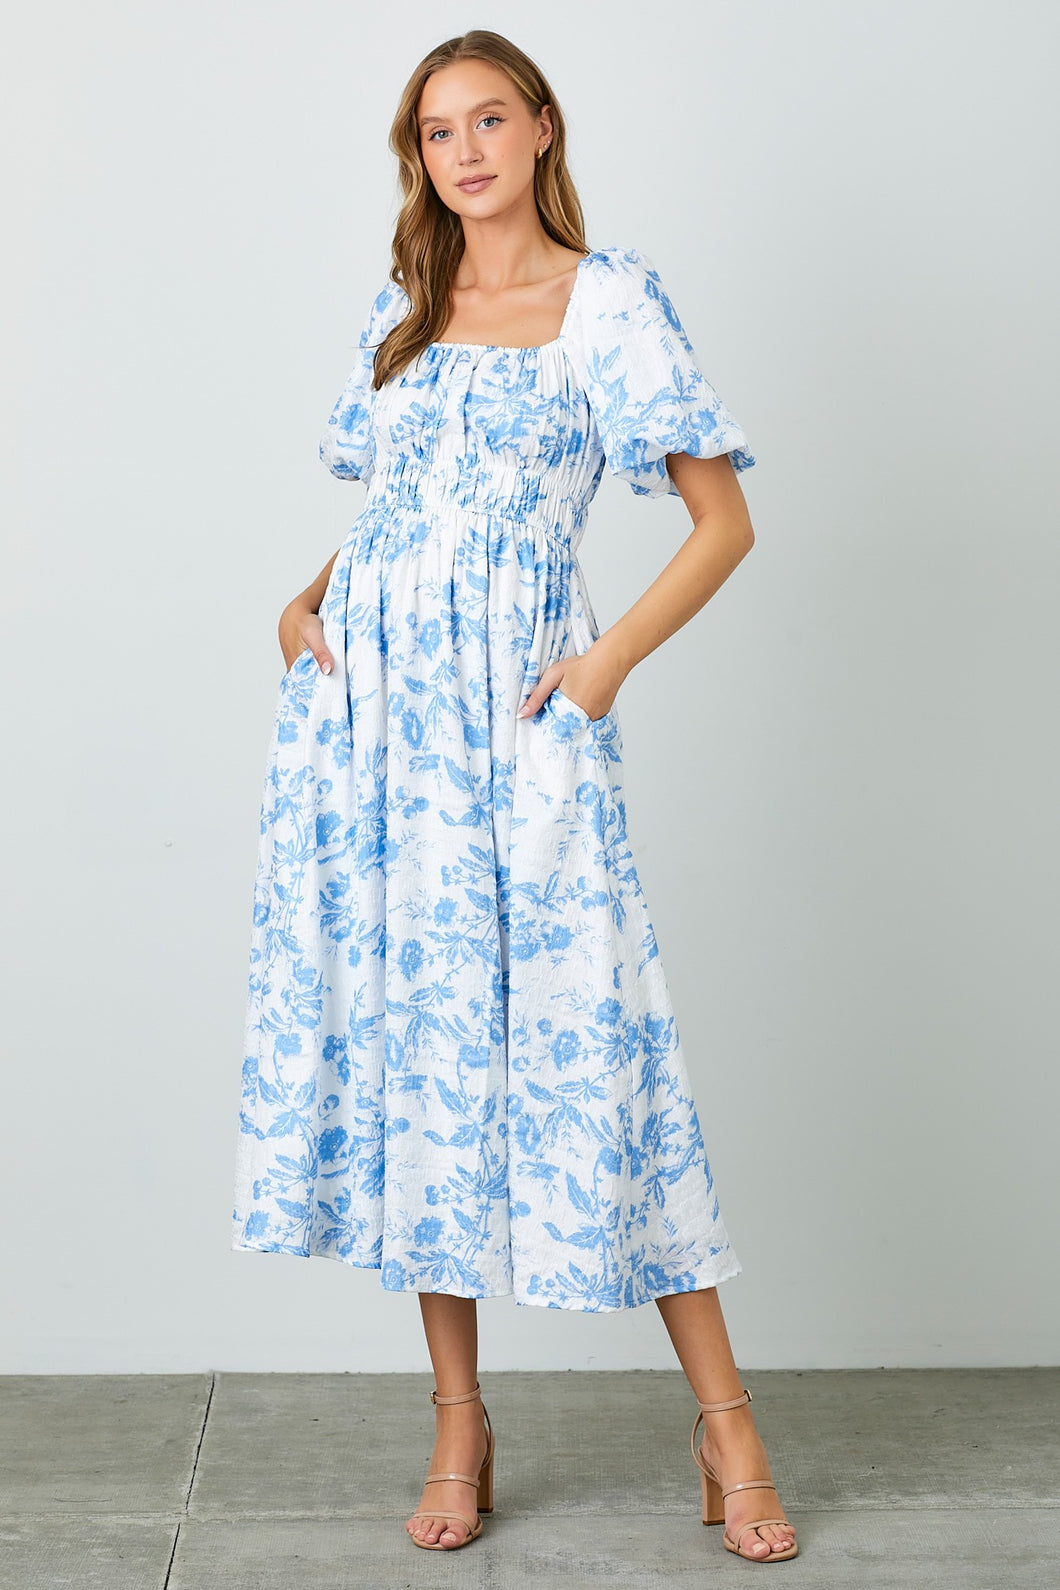 Polagram Textured Floral Print Midi Dress in Blue